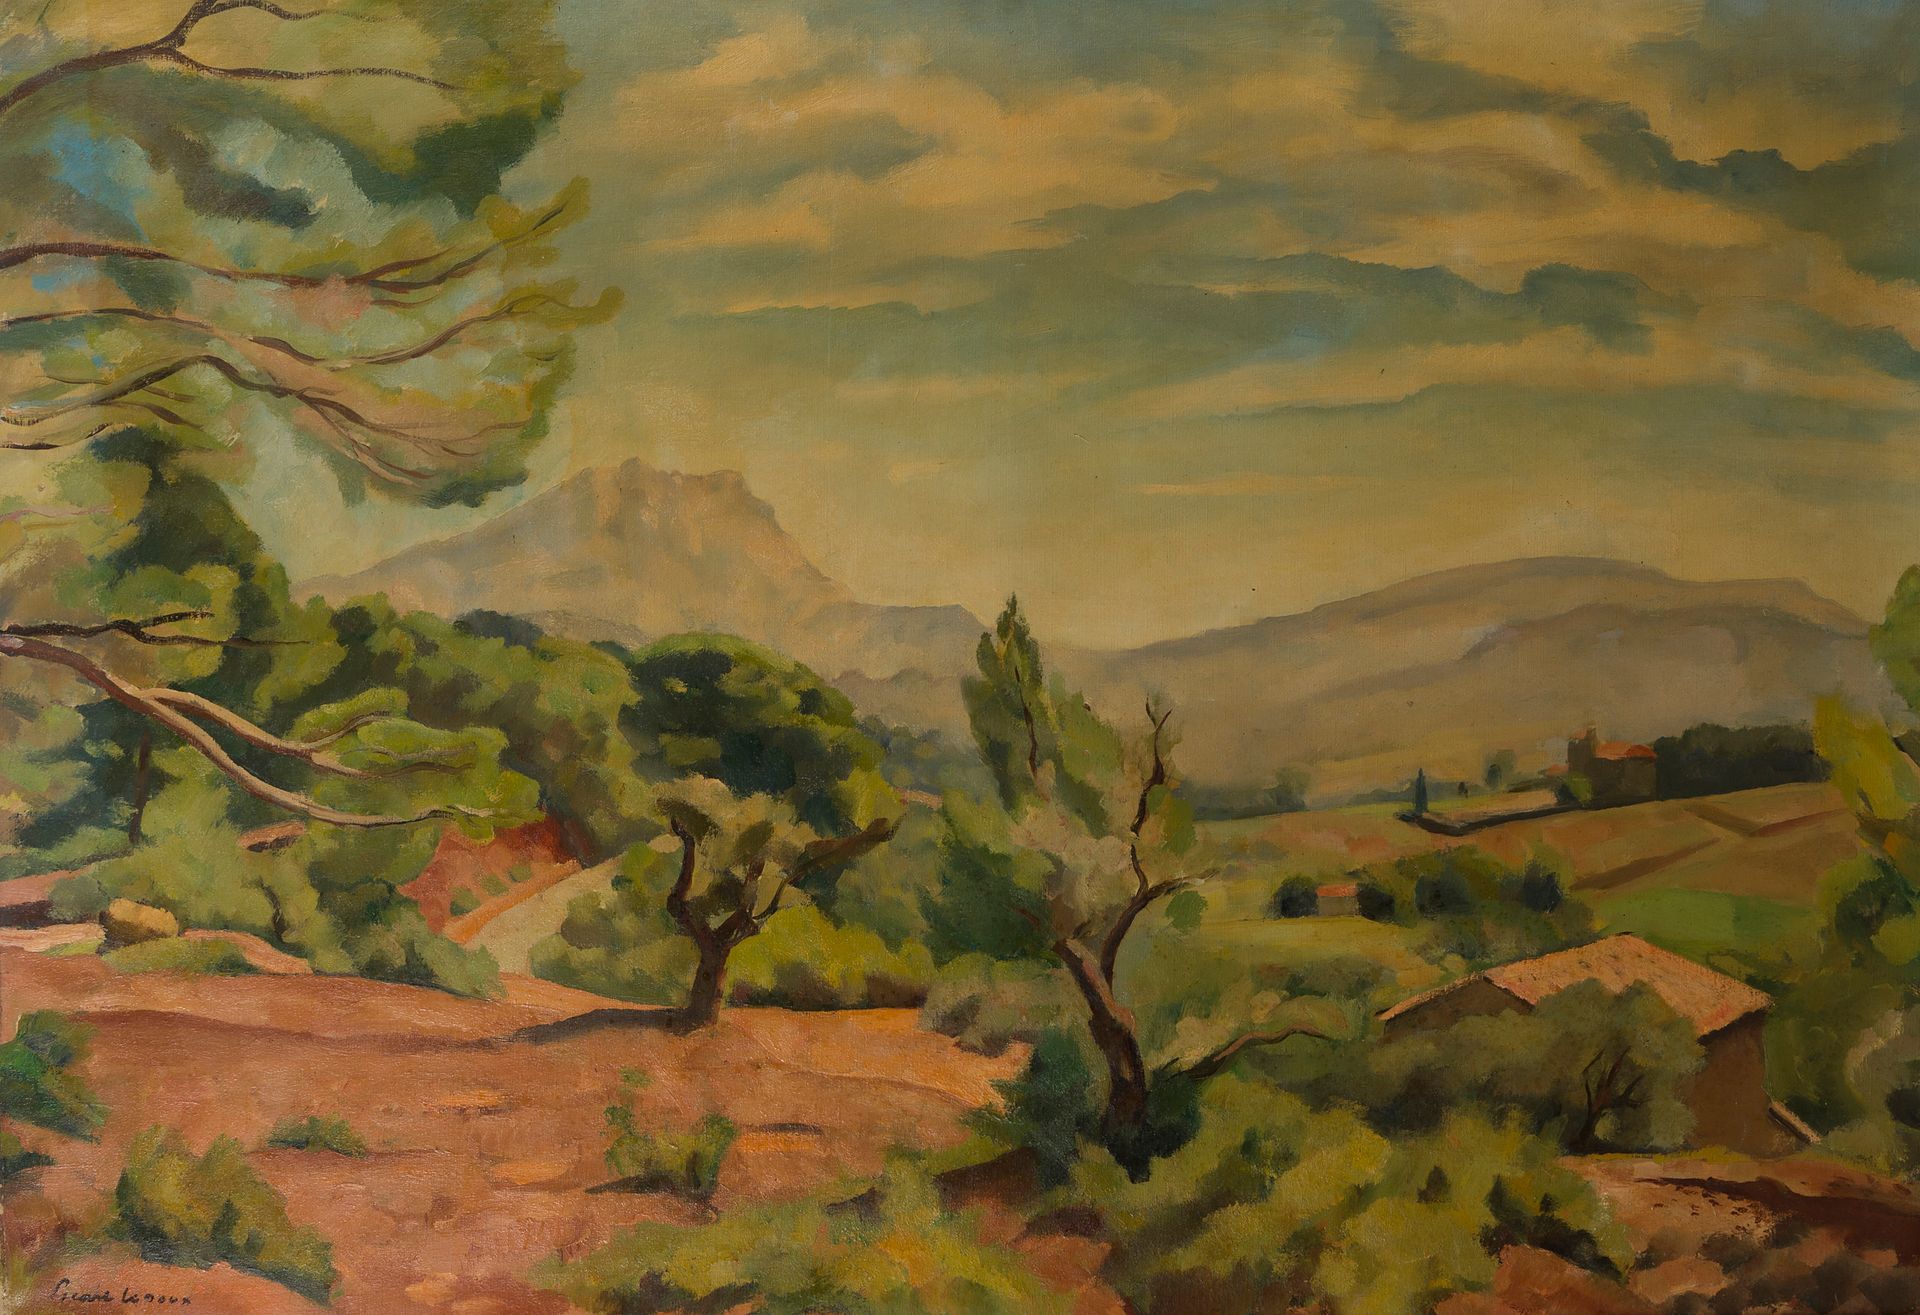 Null 夏尔-皮卡特-勒杜(1881-1959)
圣维克多尔》（The Sainte Victoire
布面油画
左下方有签名
89 x 130 cm